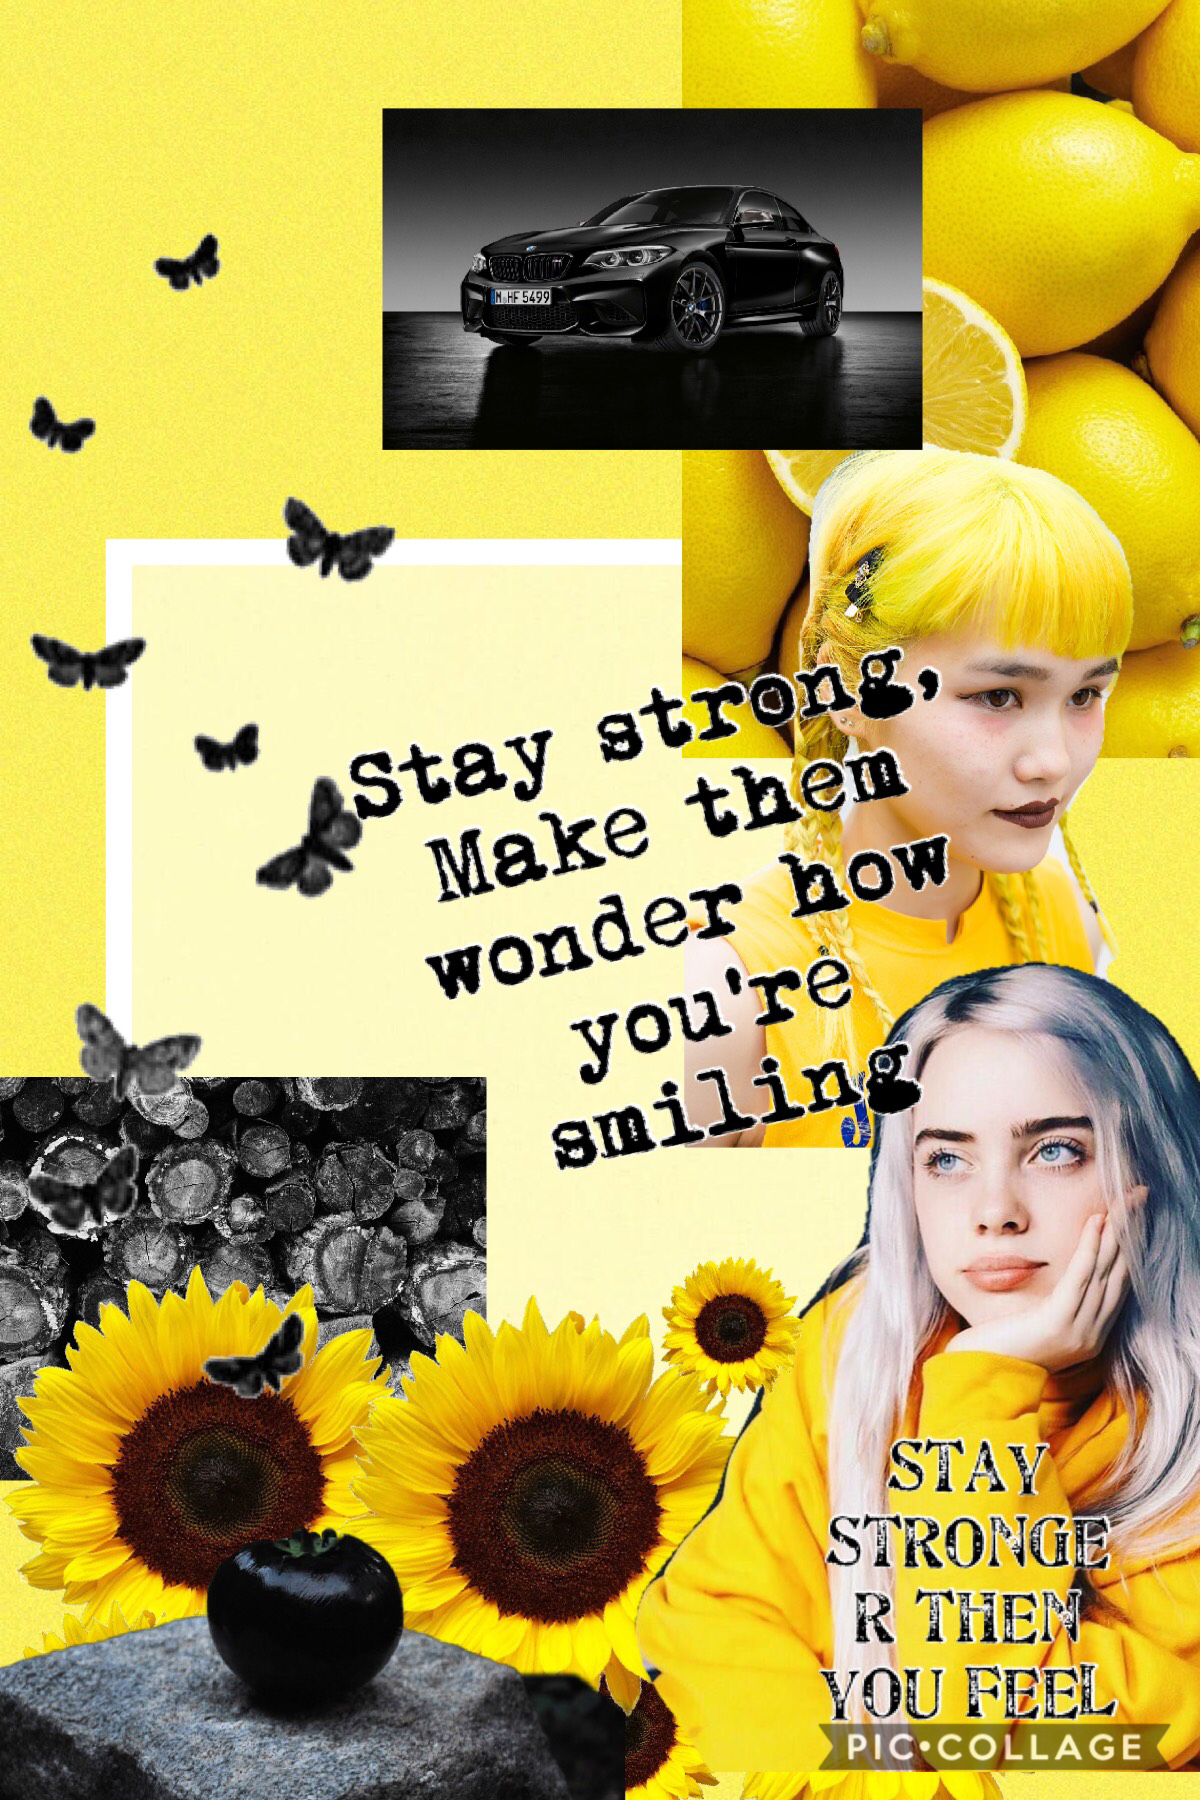 Collage by sunflowersintherain19